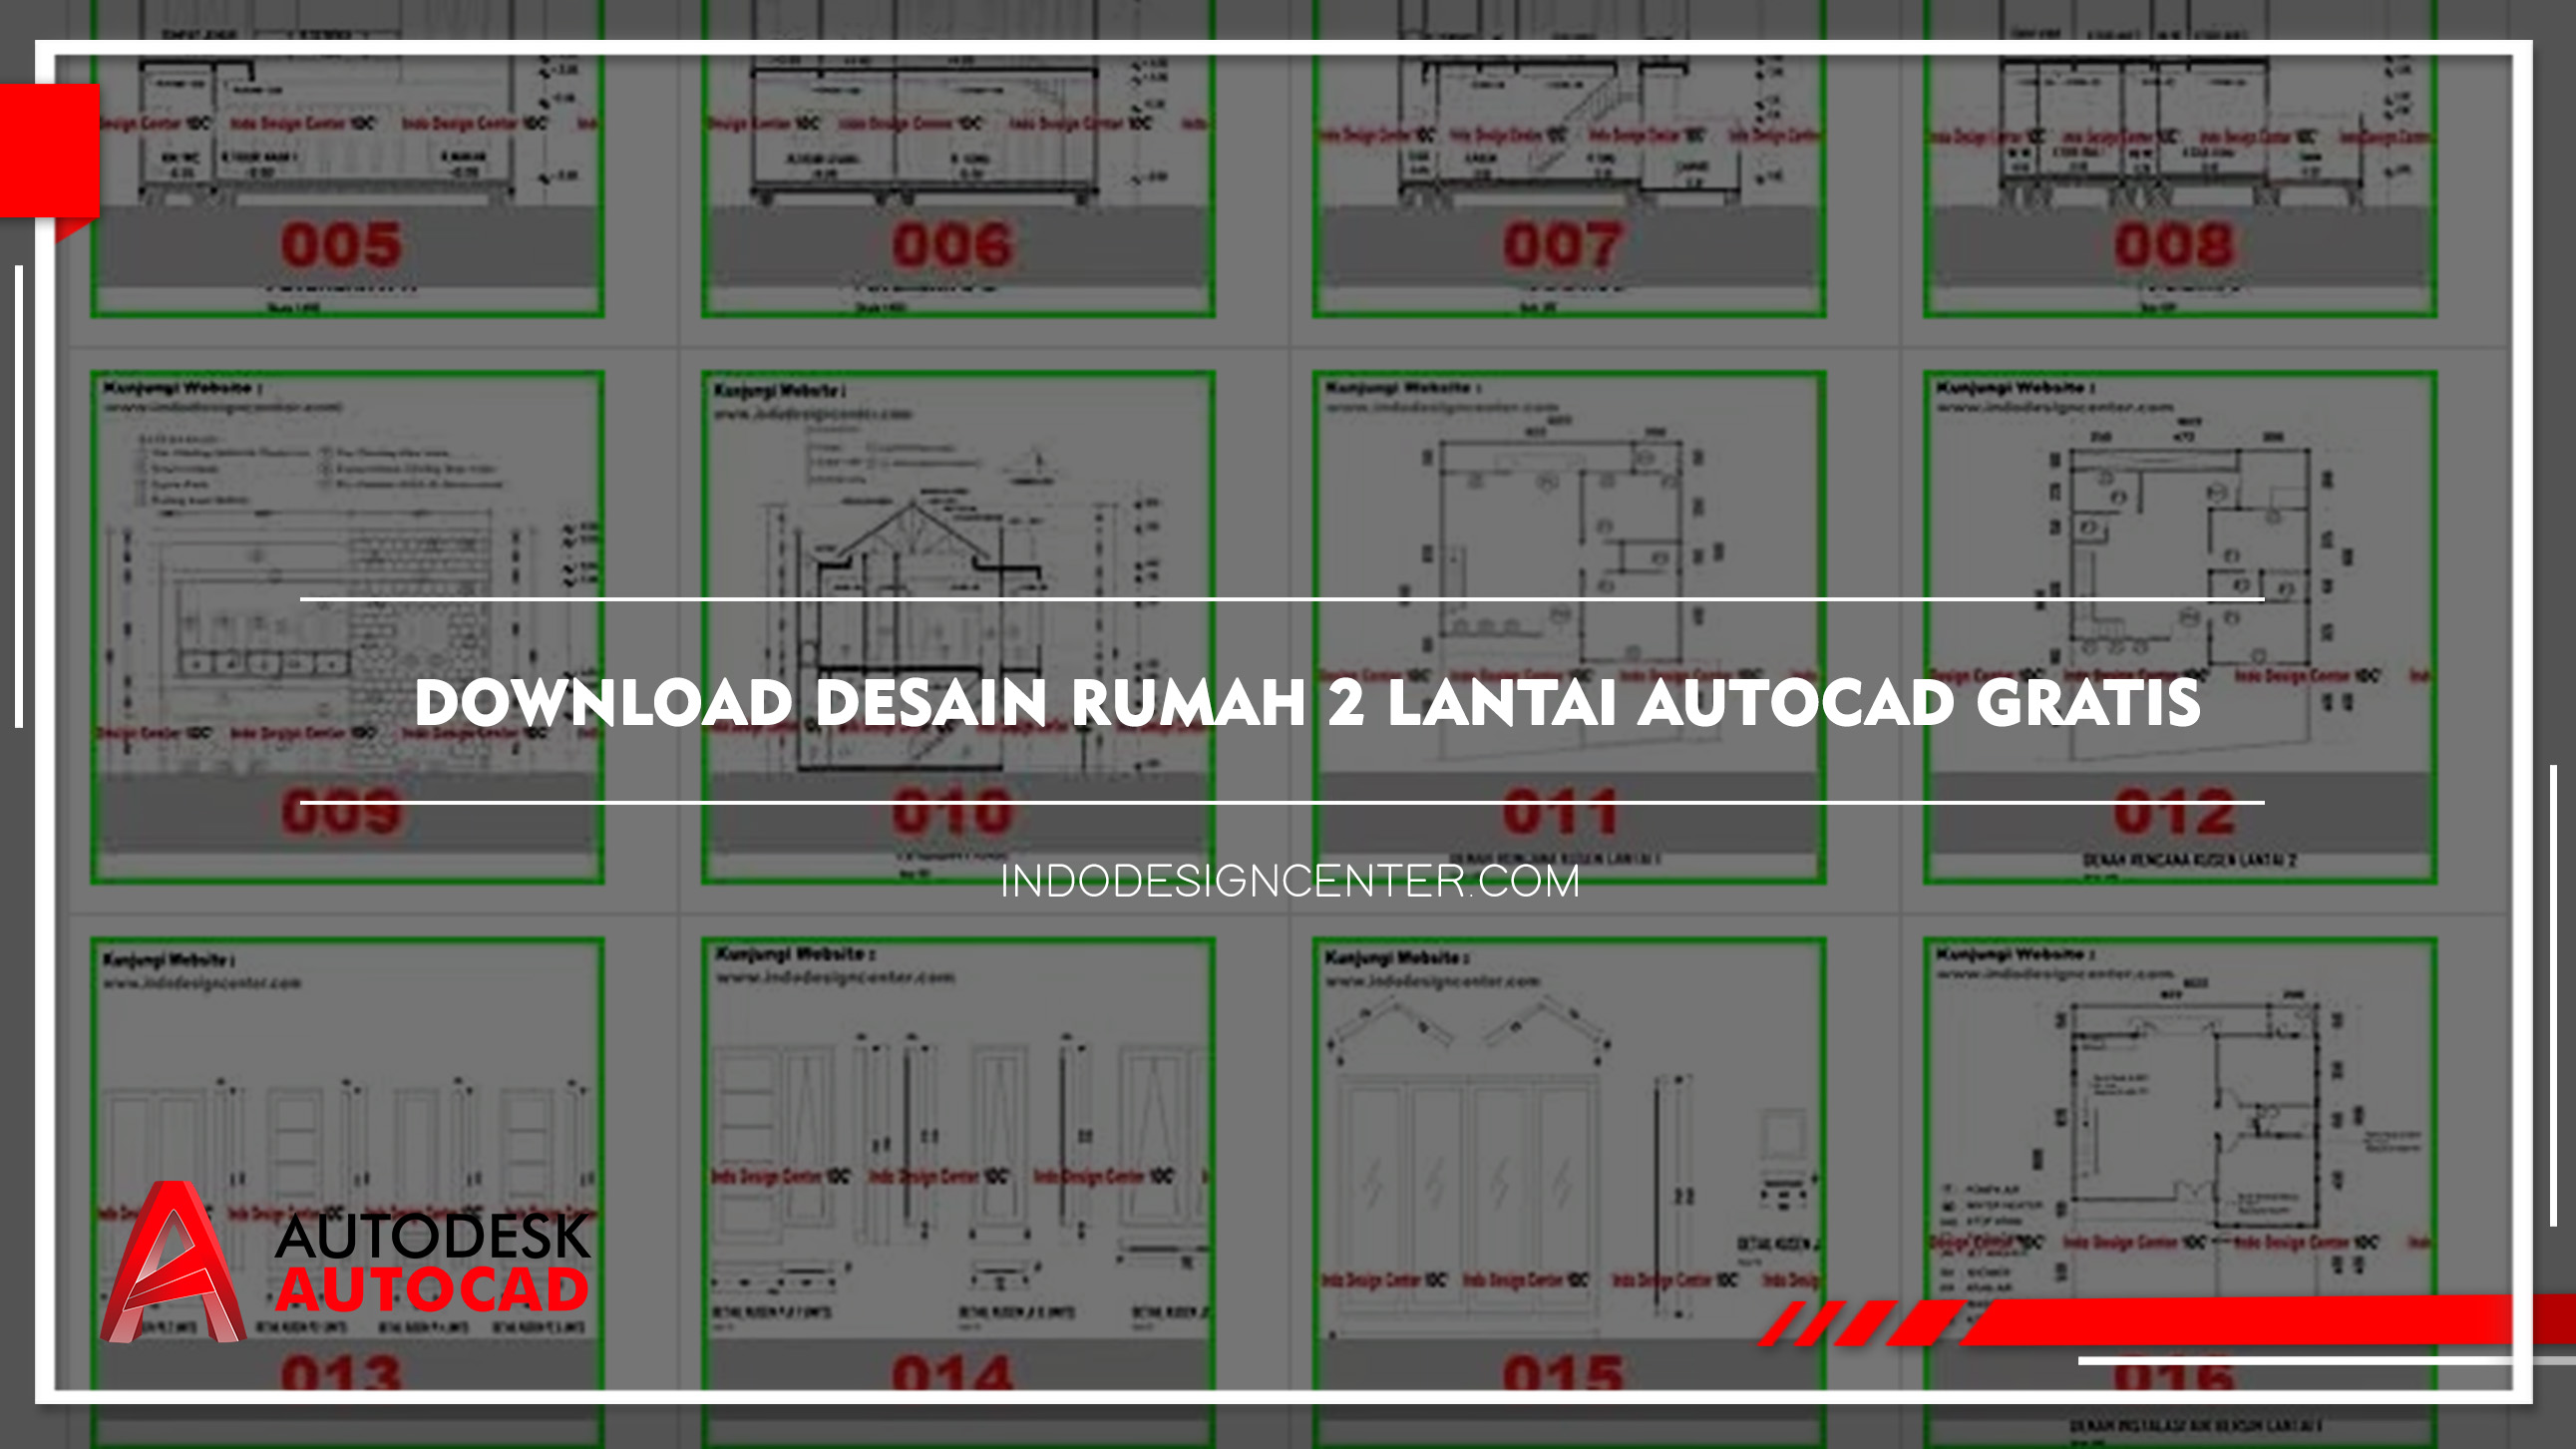  Download  Desain  Rumah  2 Lantai Autocad  Gratis  Free  Download 